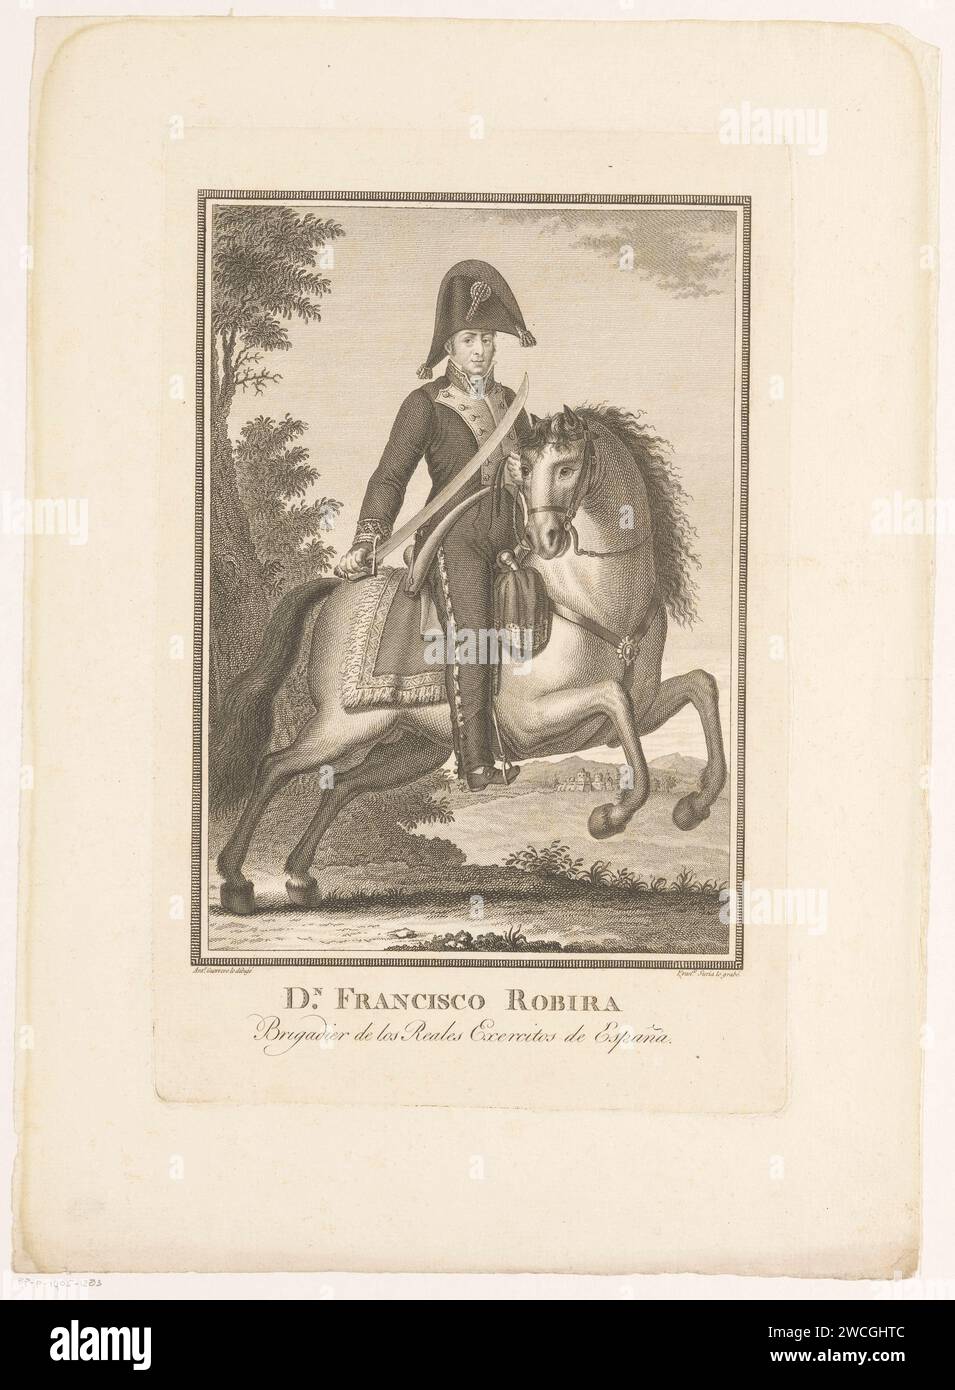 RUITORPORT VAN FRANCISCO ROBIRA, FRANCISCO SURÍA, AFTER ANTONIO GUERRERO, 1797 - 1836 print  Spain paper etching historical persons. equestrian state-portrait Stock Photo